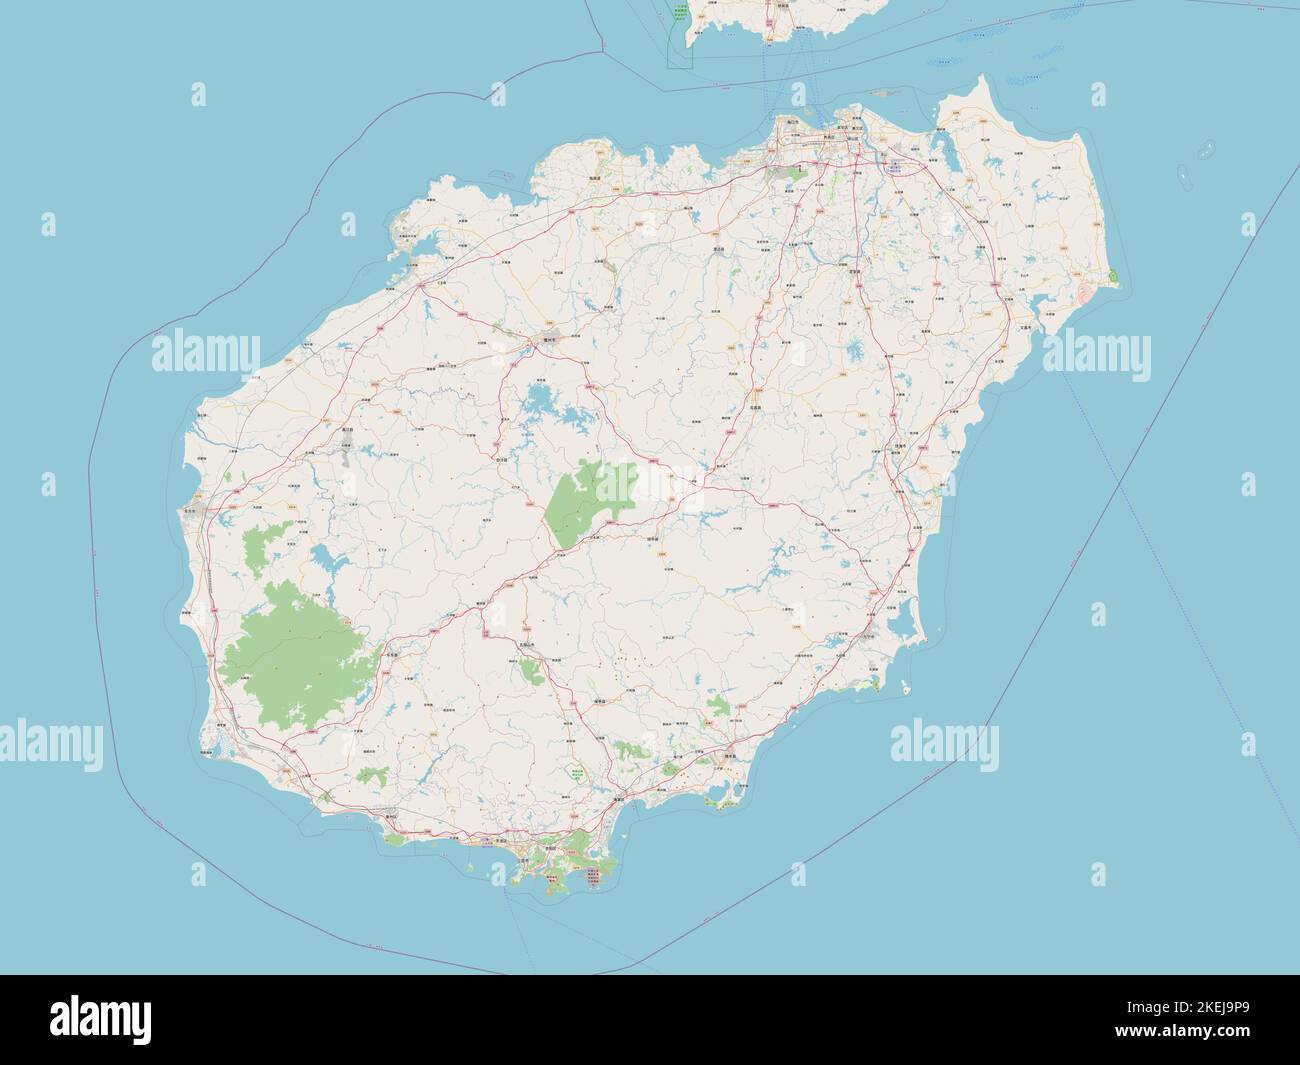 Hainan, province of China. Open Street Map Stock Photo